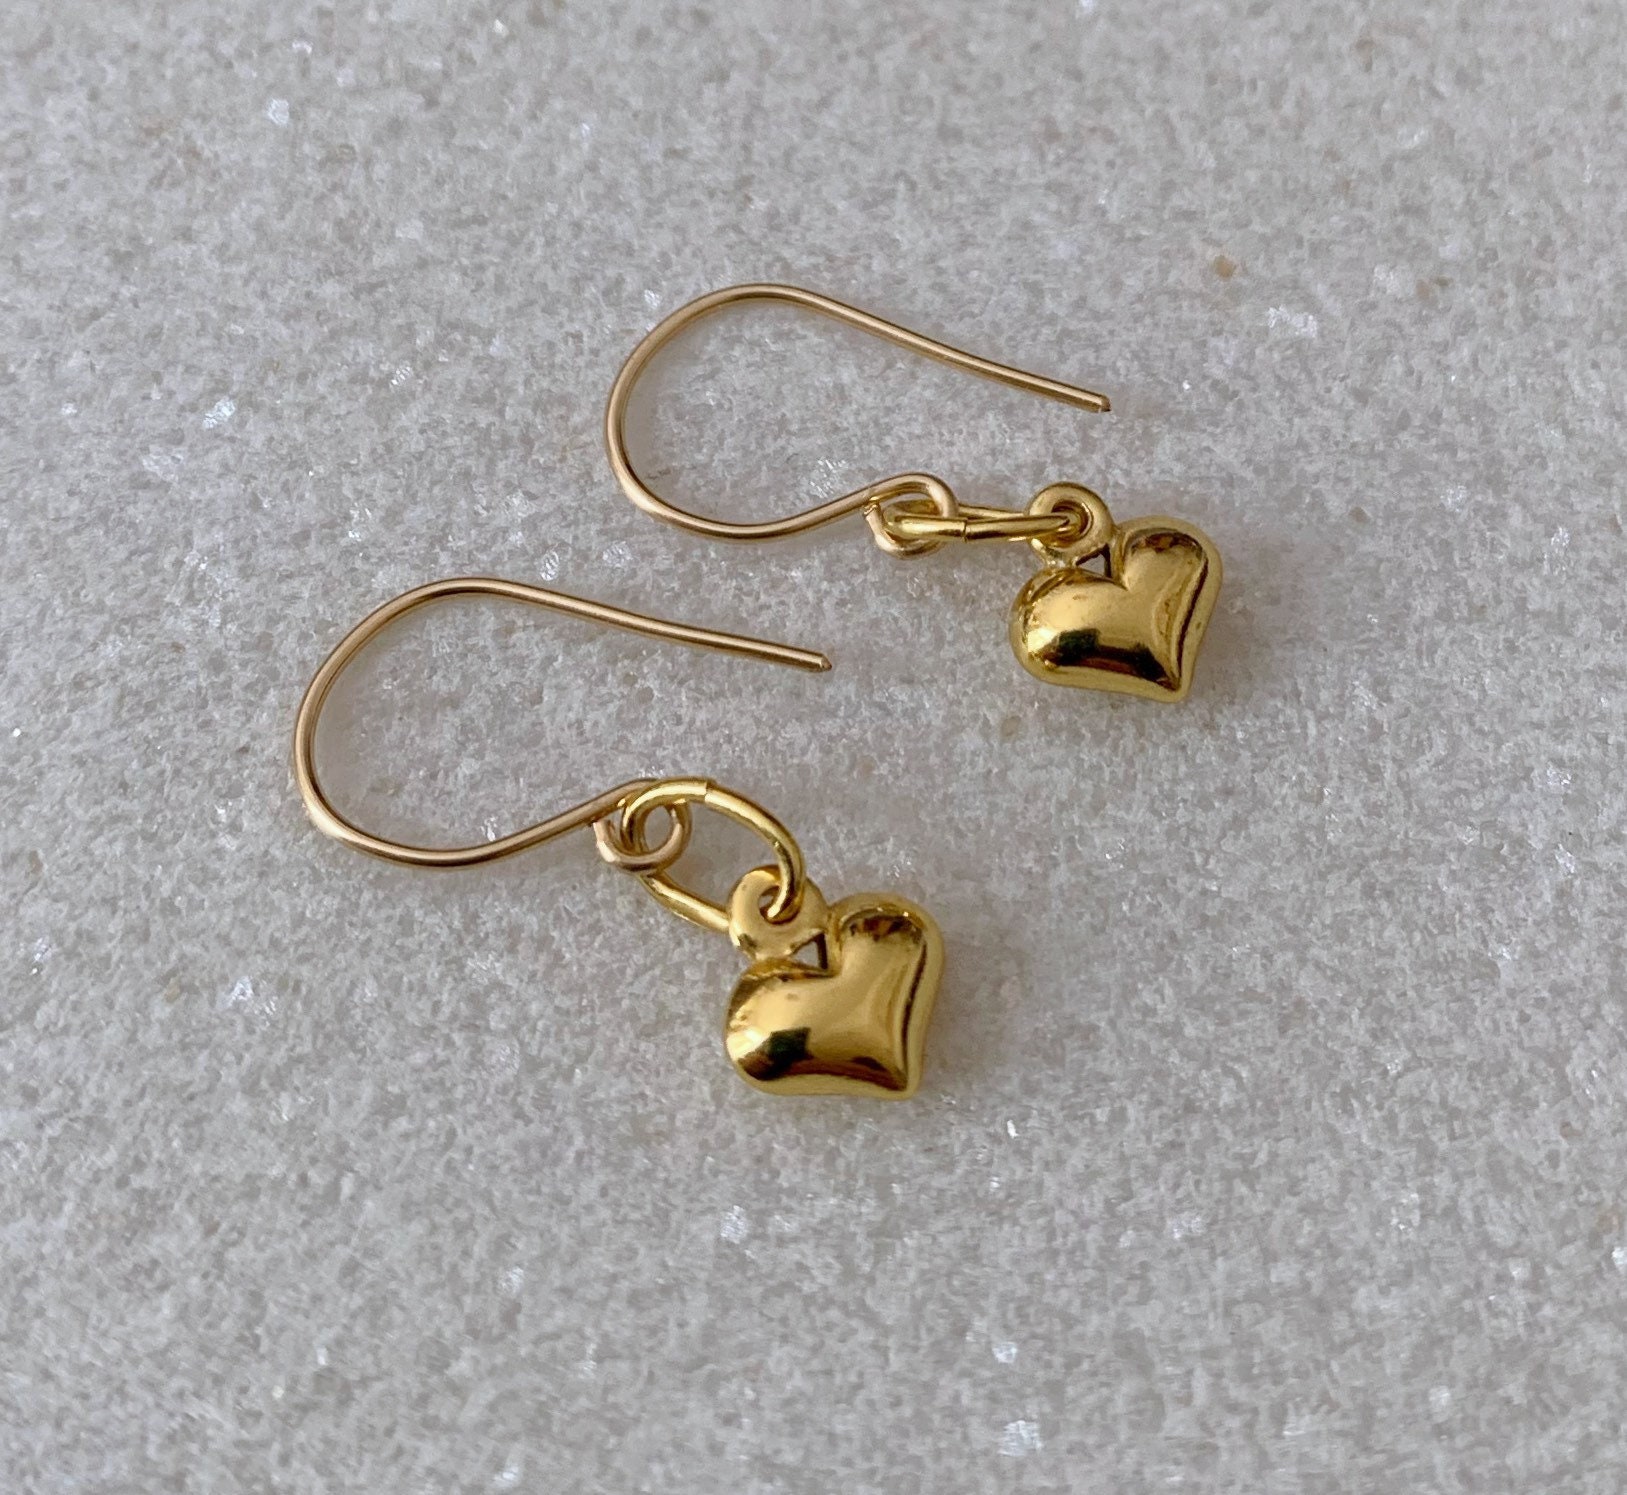 VALENTINES EARRINGS Hollow out Heart Drop Earrings for Women Gold